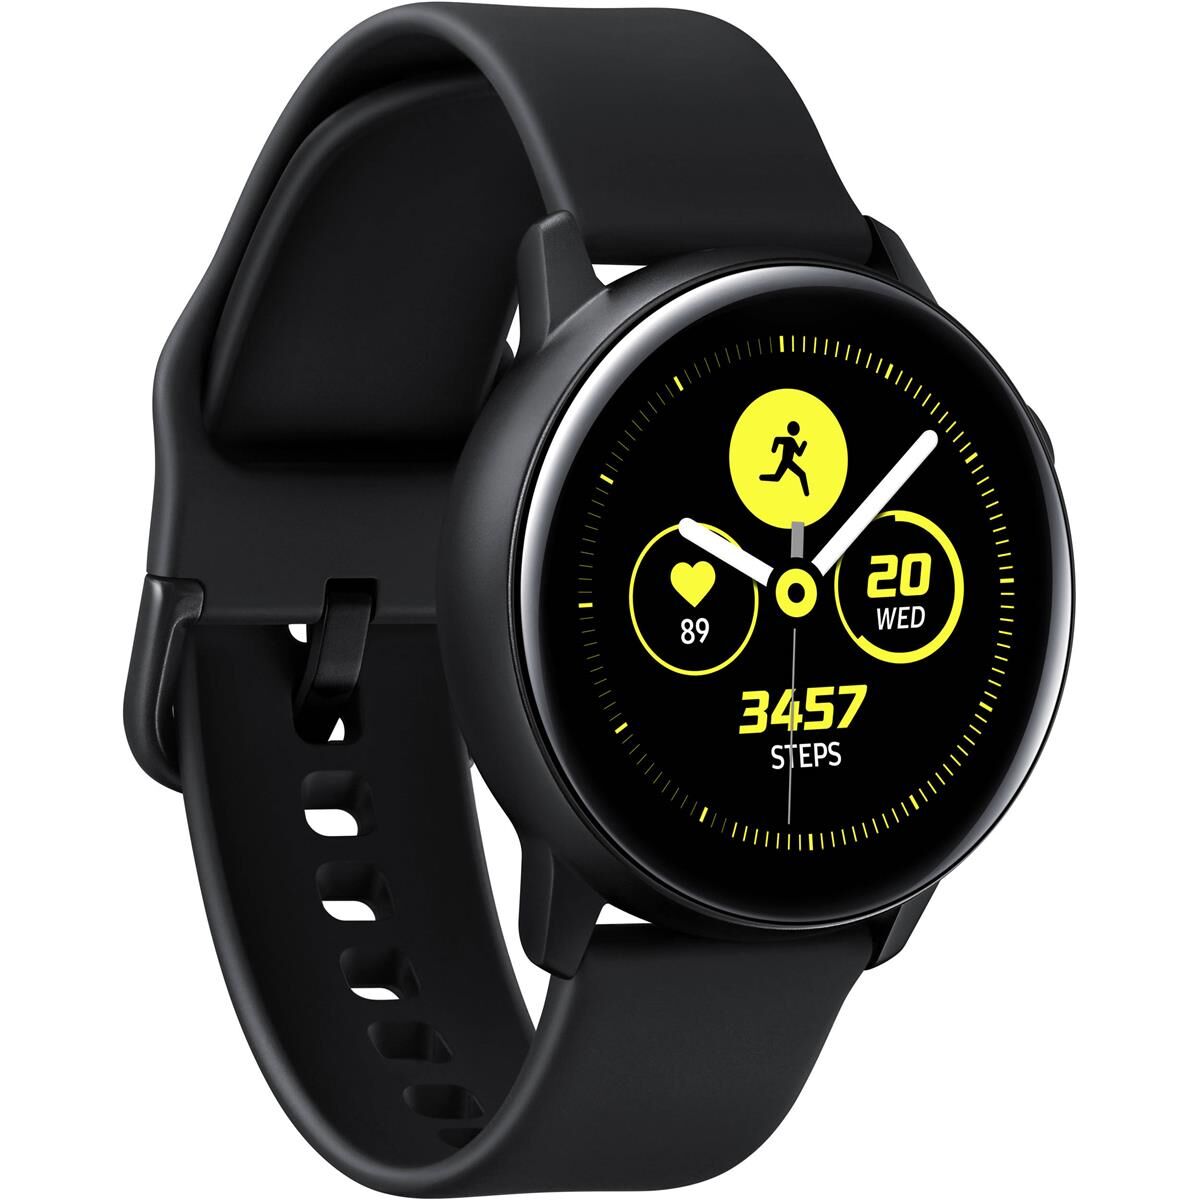 Samsung Galaxy Watch Active with Bluetooth, 40mm, Black